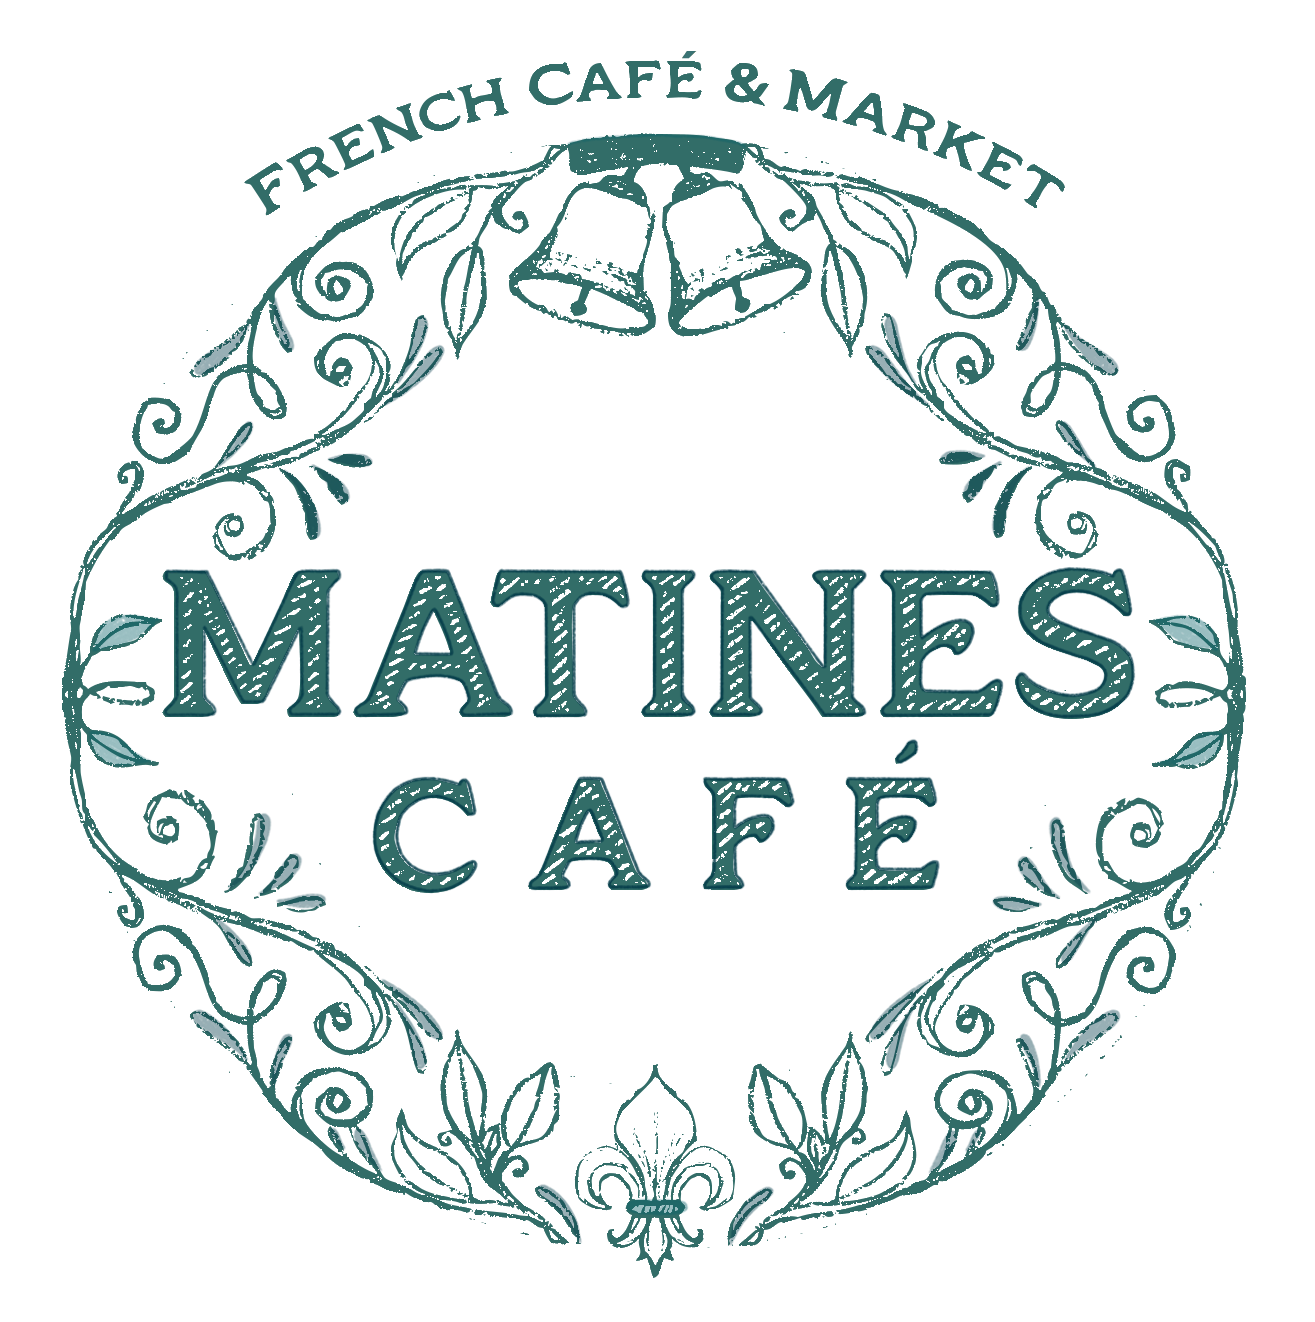 Matines Café